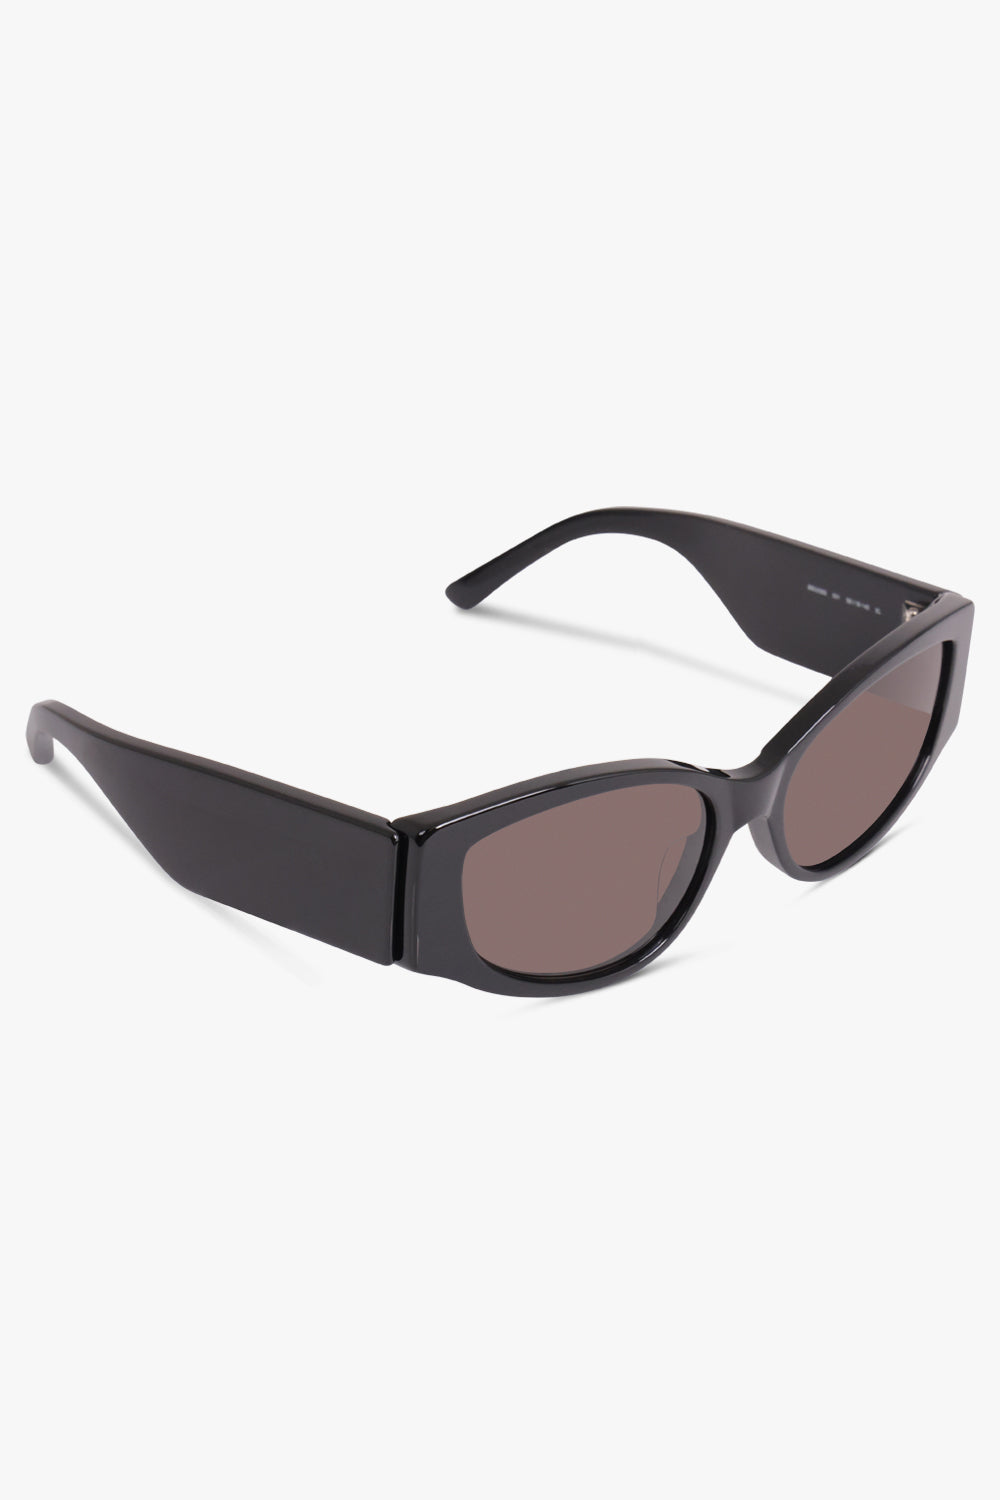 BALENCIAGA ACCESSORIES BLACK / BLACK BB0258S 58 Cat Eye Sunglasses | Black